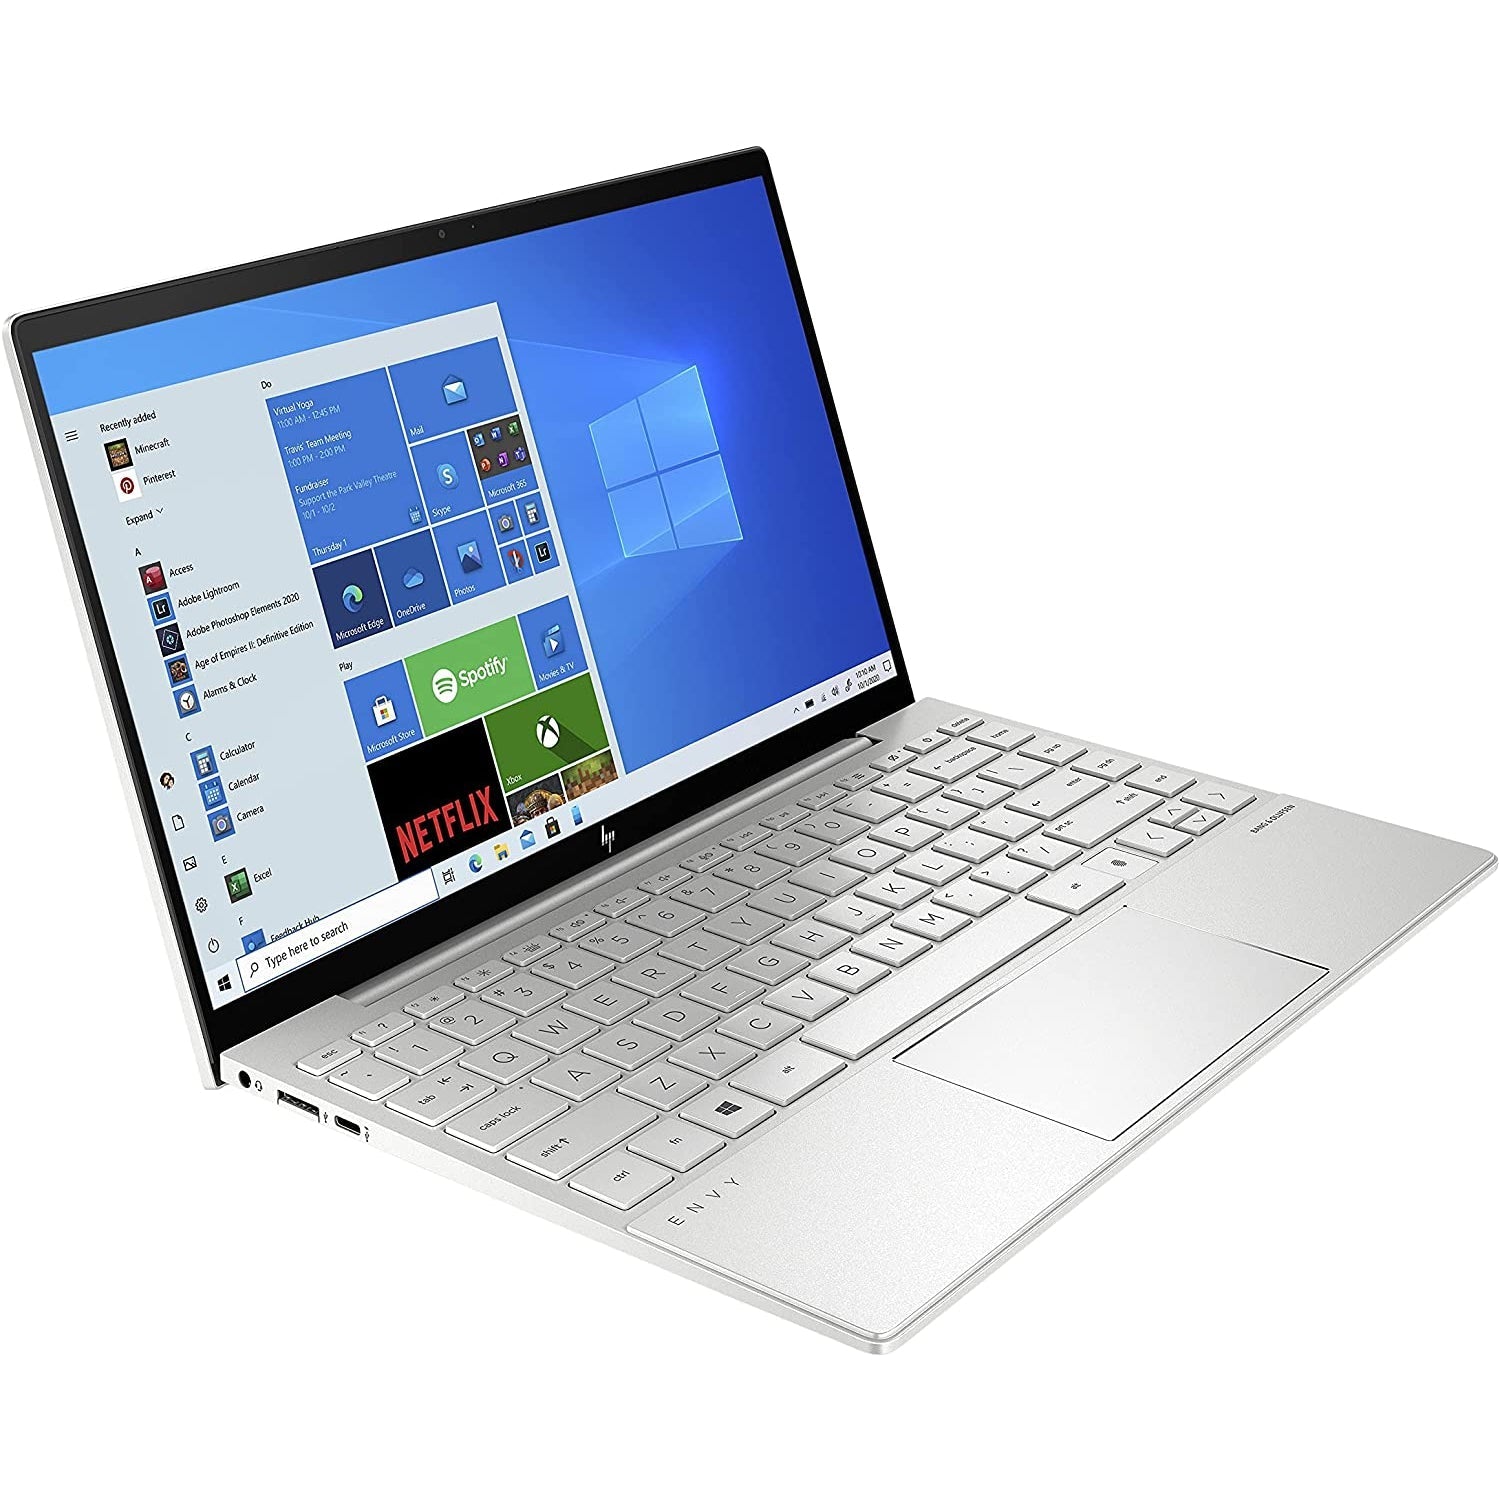 HP Envy 13-ba0002na 13.3" Laptop, Intel Core i5-1035G1, 8GB RAM, 512GB SSD, Silver - Refurbished Excellent